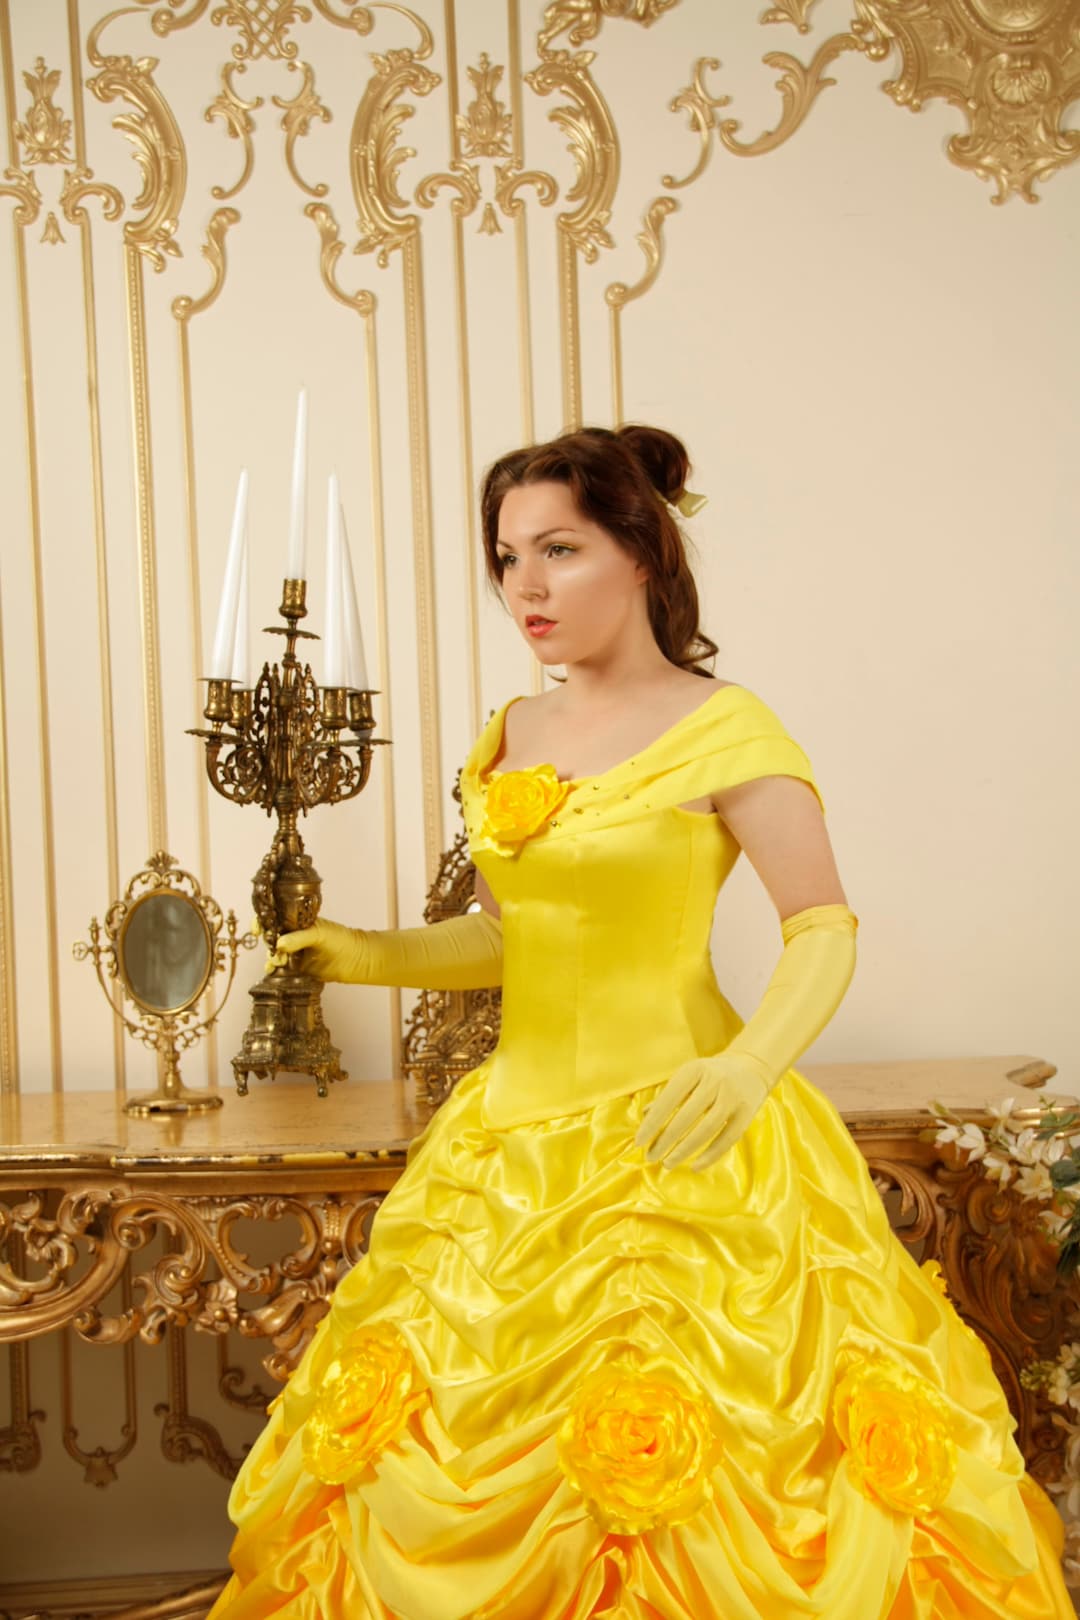 Belle's Dress Costume. Adult Belle Cosplay Costume. Belle. - Etsy